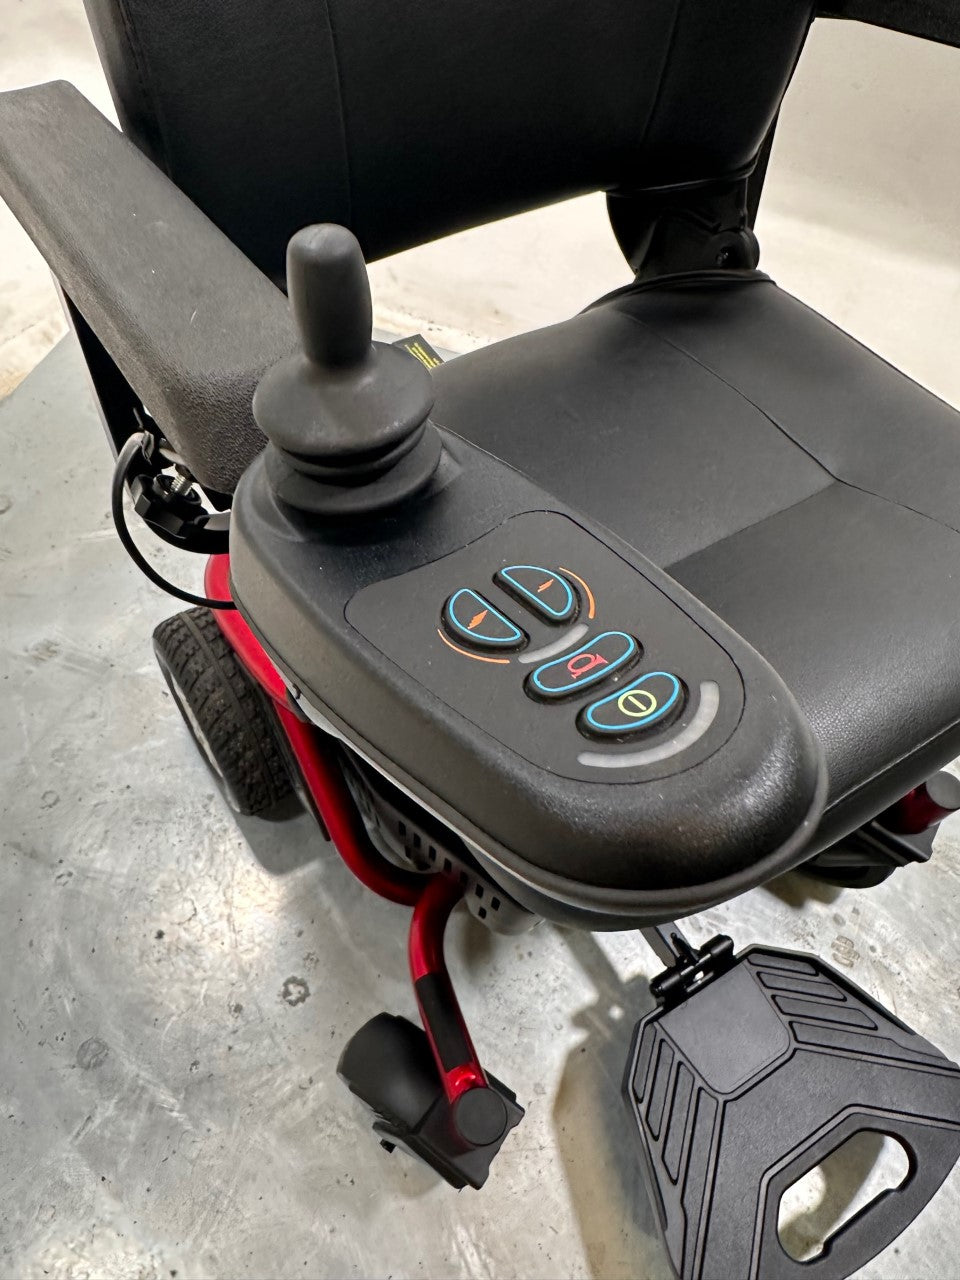 Vanos Travelux Quest Transportable Powerchair 18ah or 22ah batteries 12-15 mile range